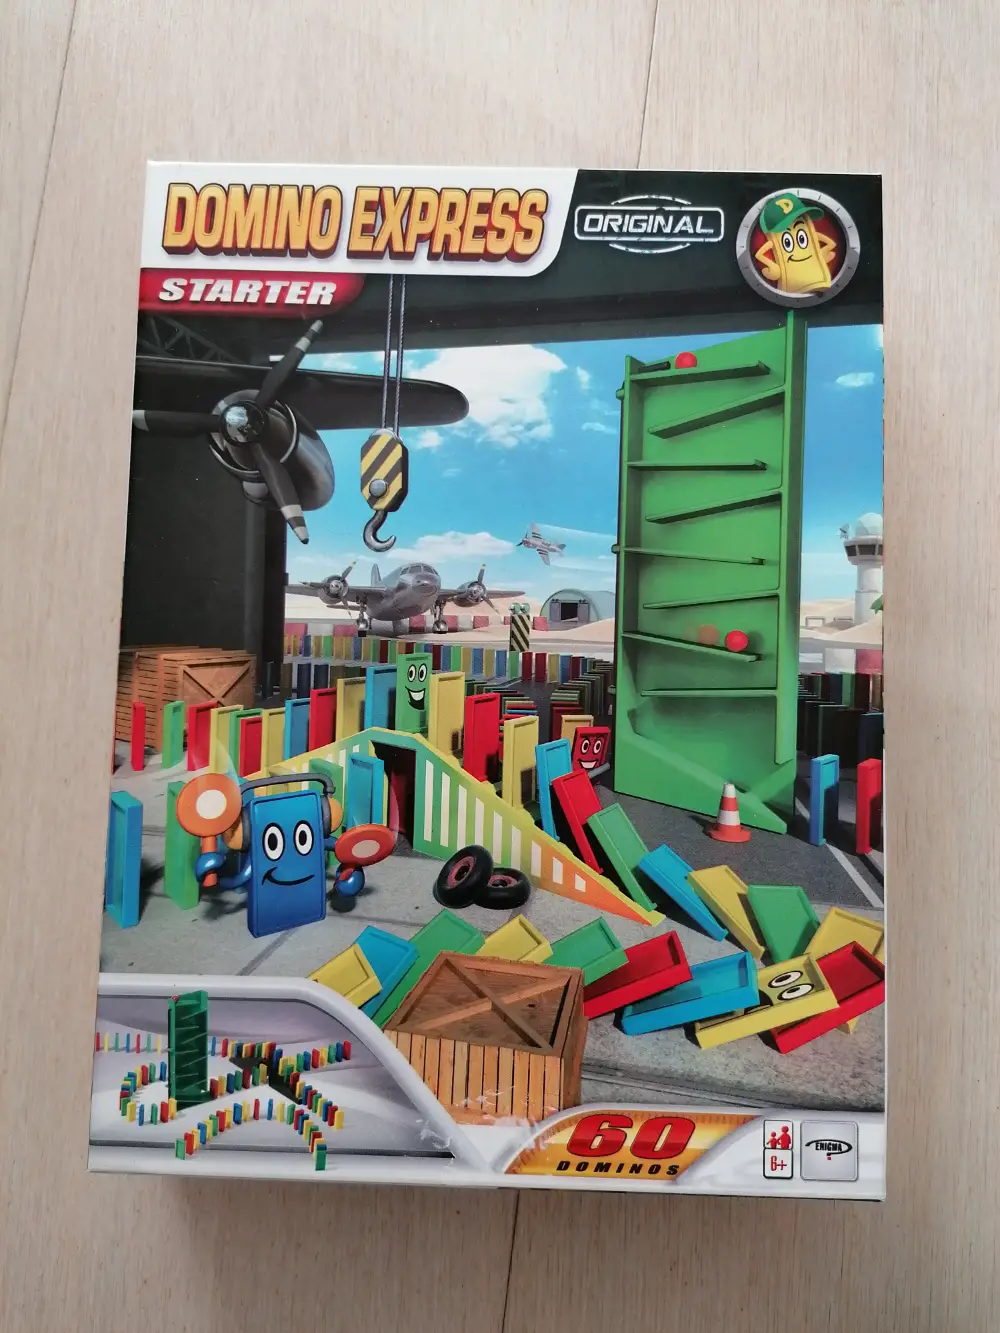 Domino express Domino